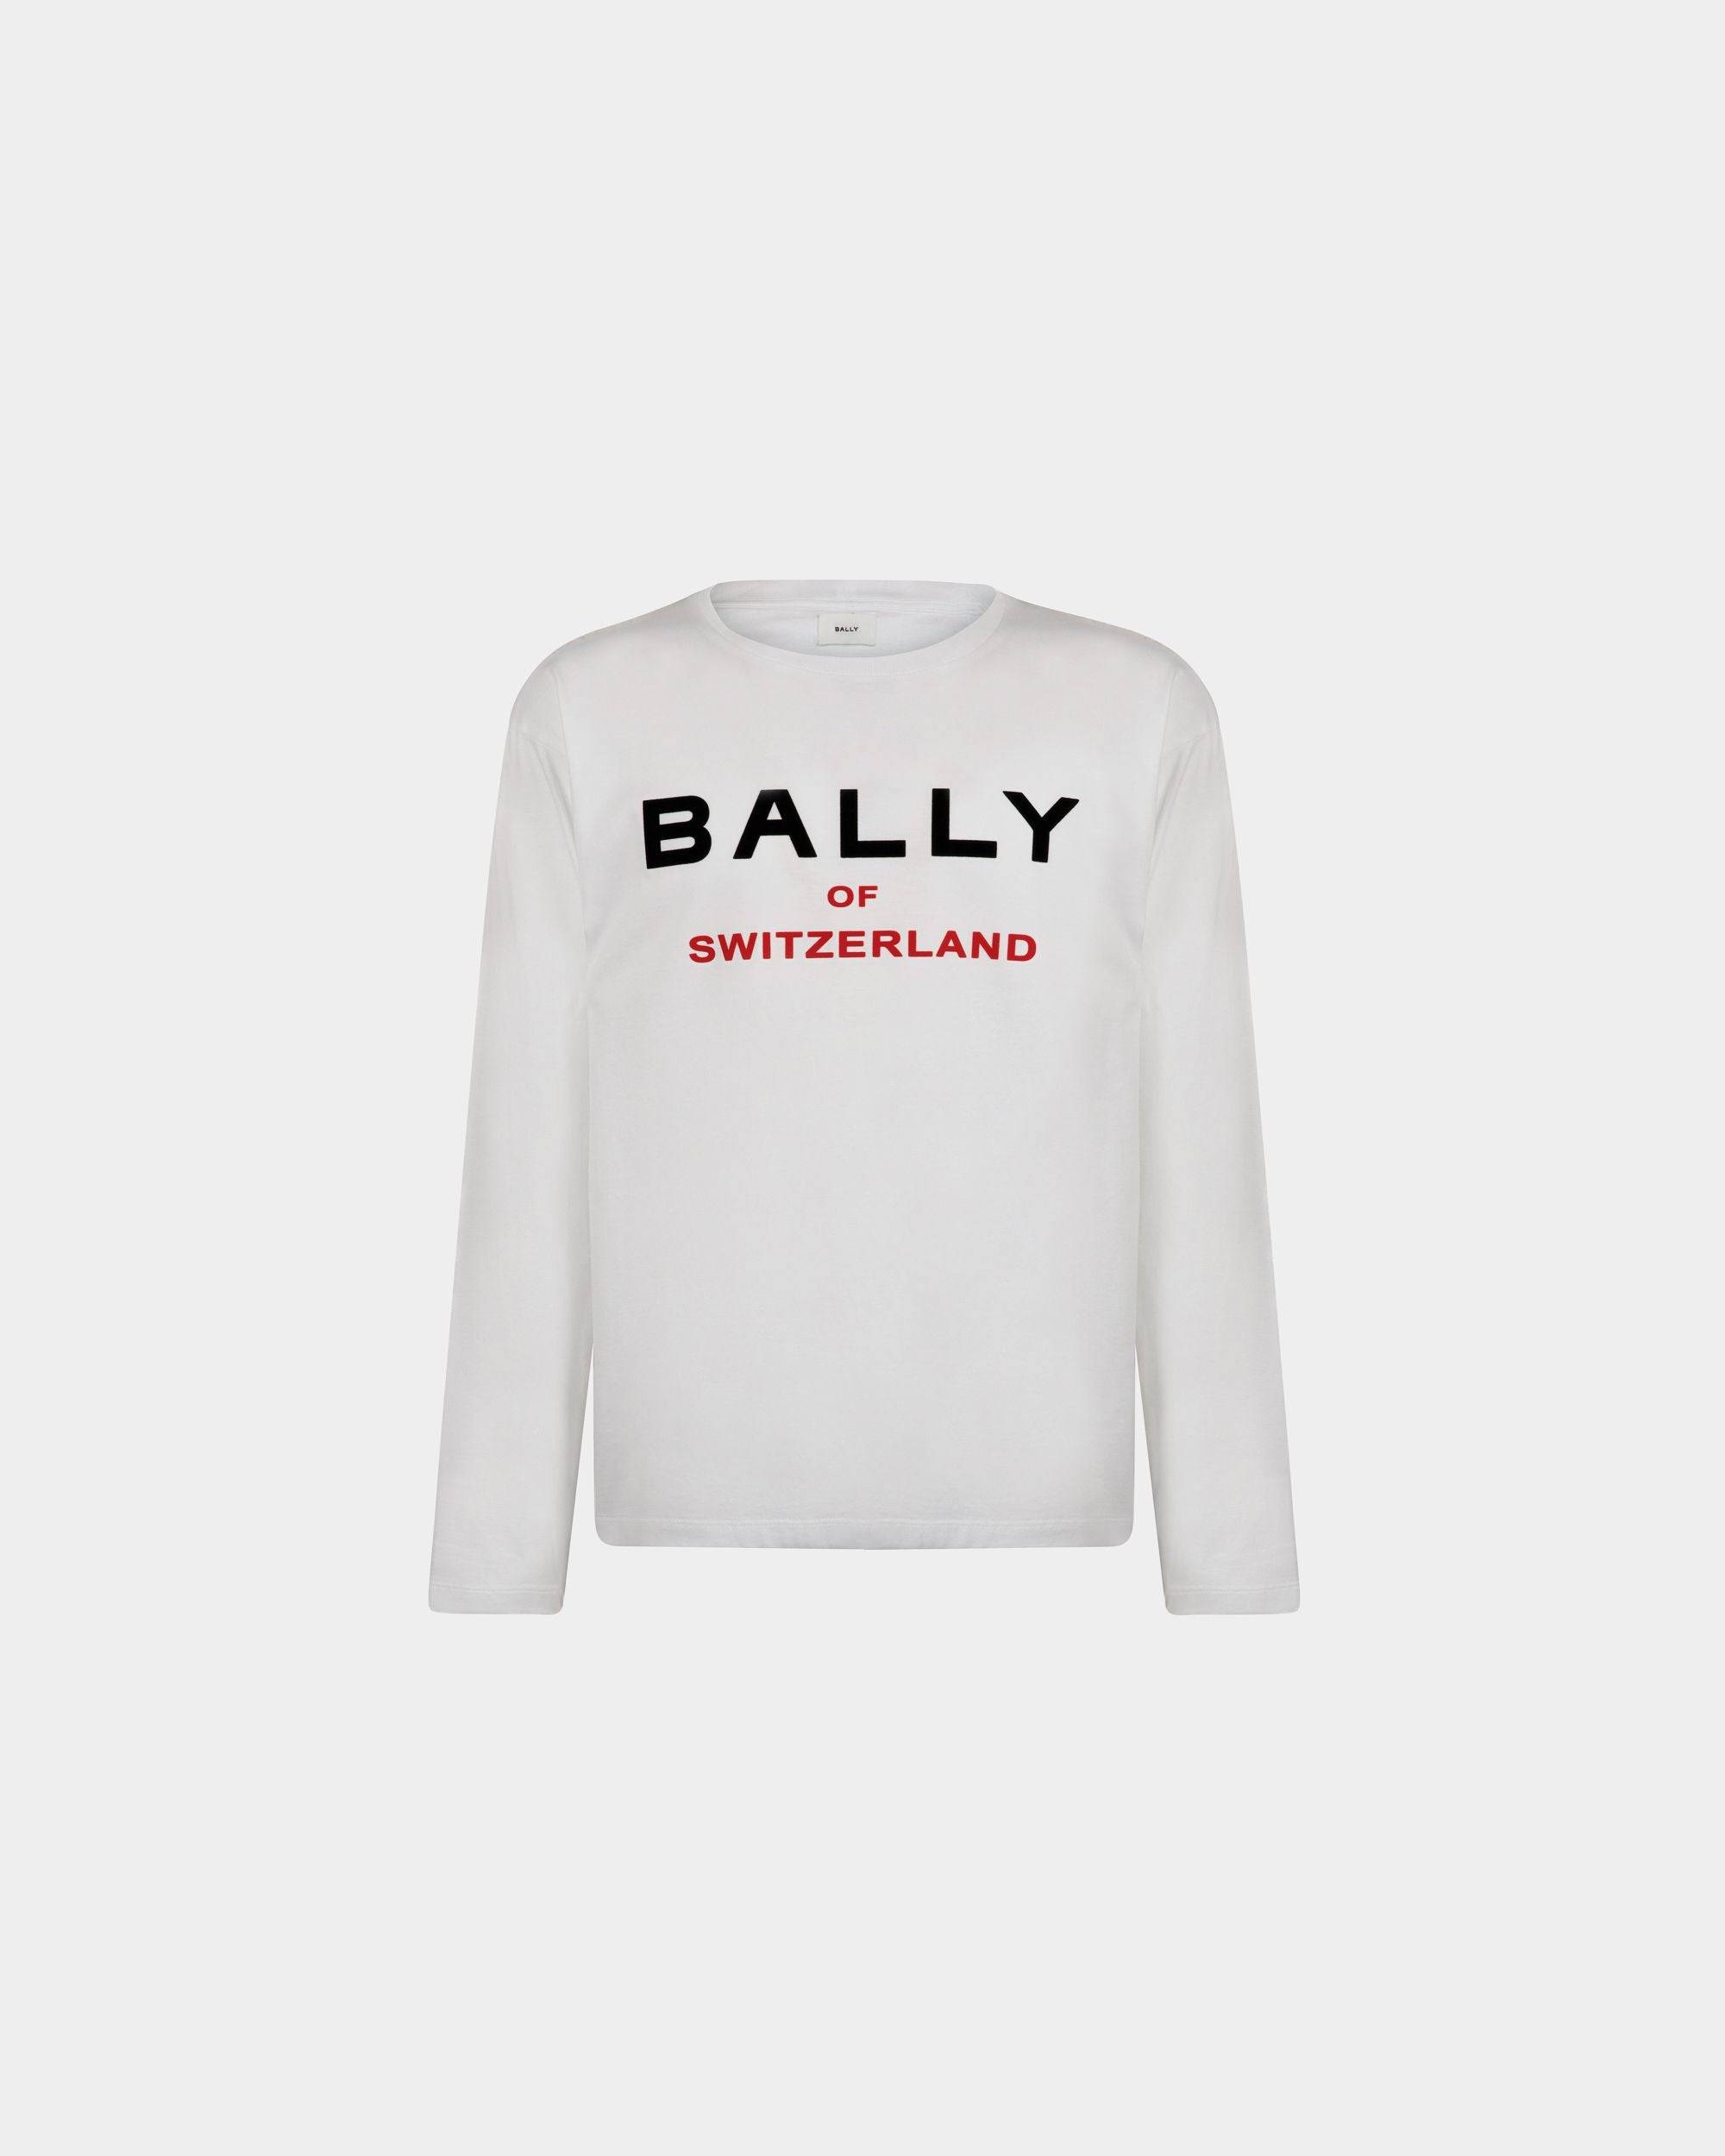 Men's T-Shirt In White Cotton | Bally | Still Life Front